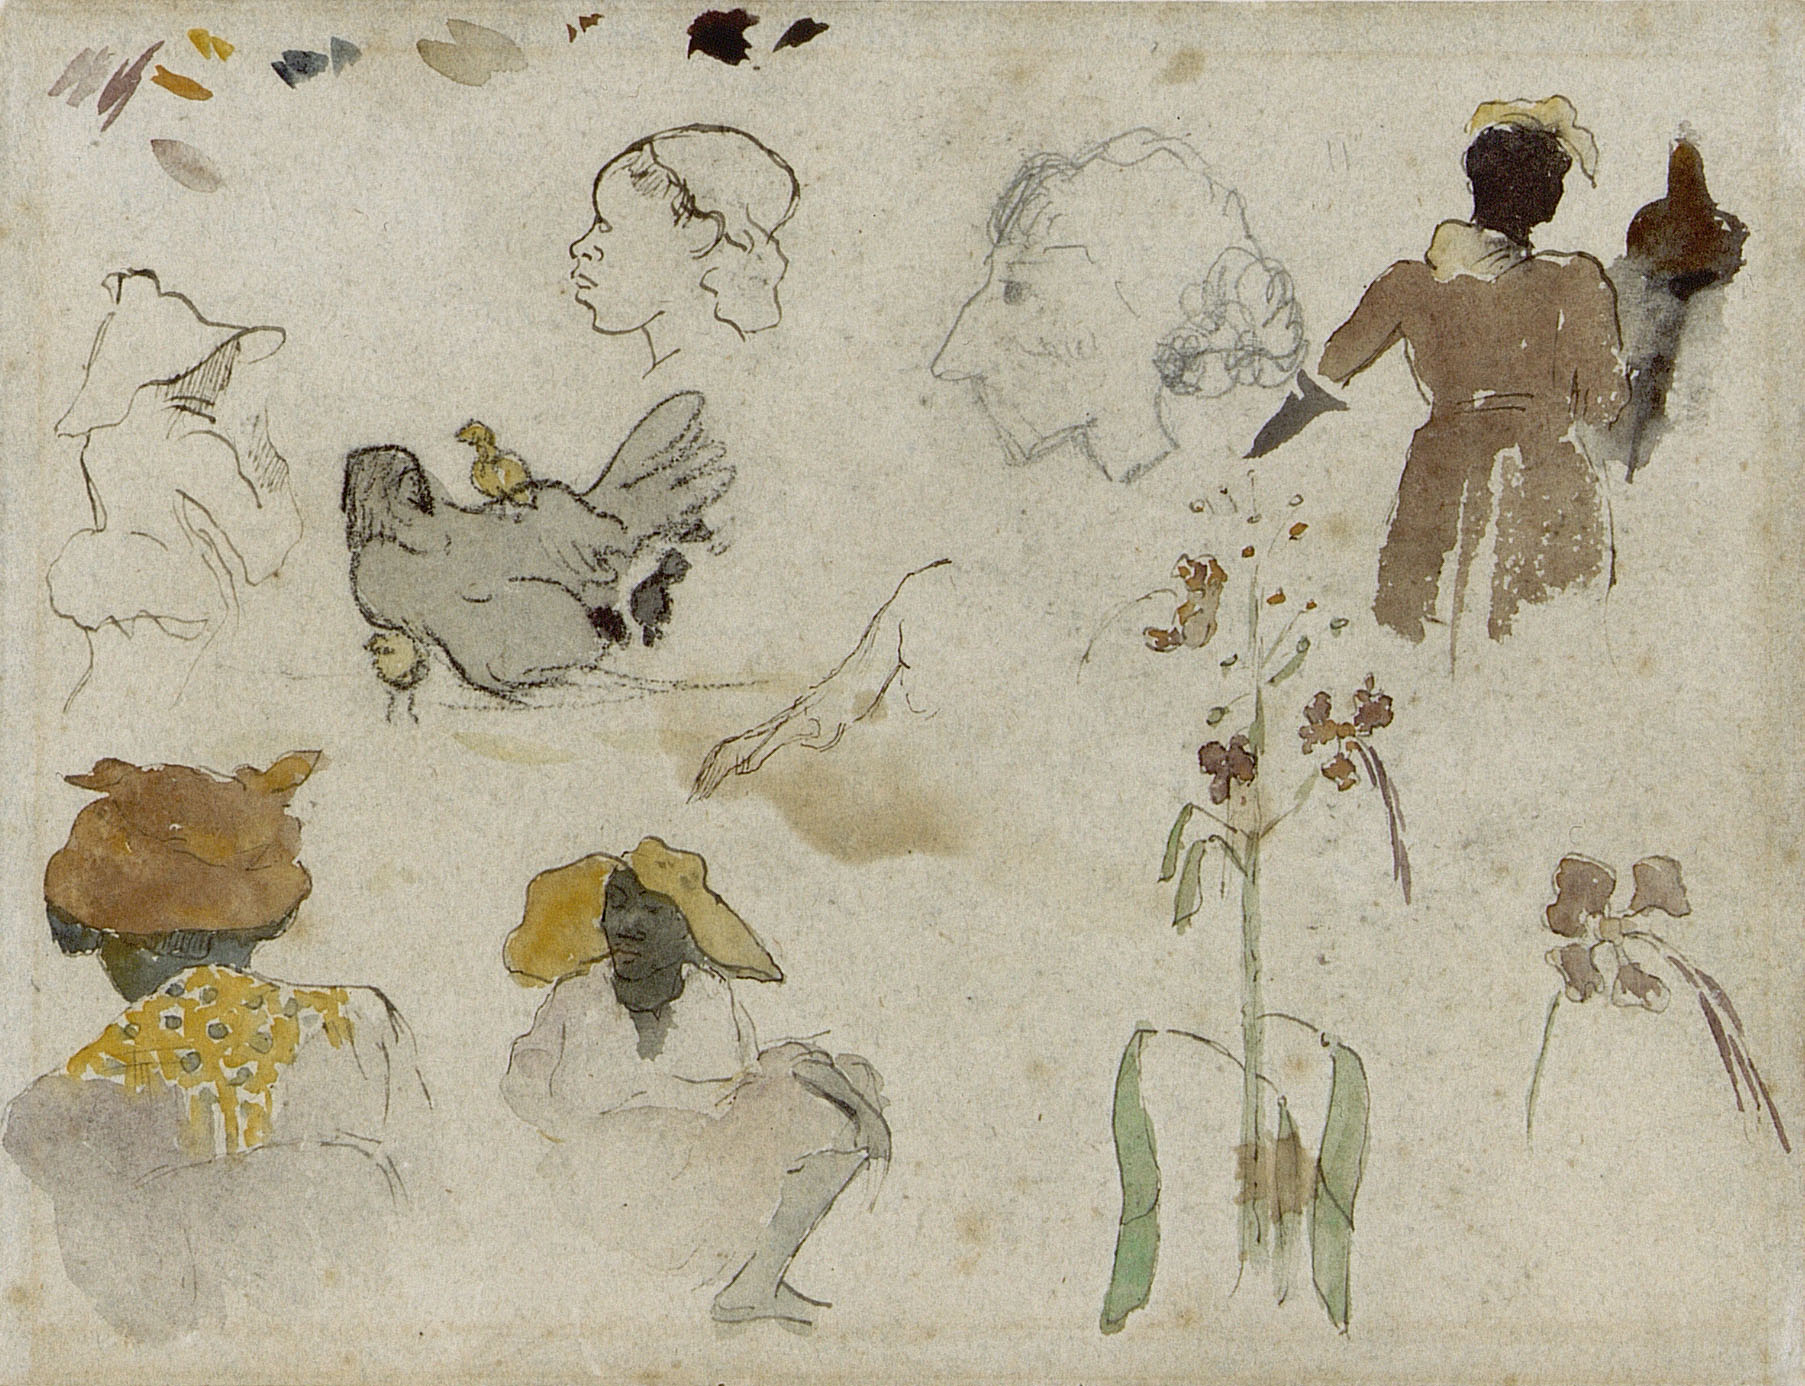 Sketch of Several Figures, Flowers and Animal by Paul Gauguin - 1887 - 20.4 x 27 cm Van Gogh Museum